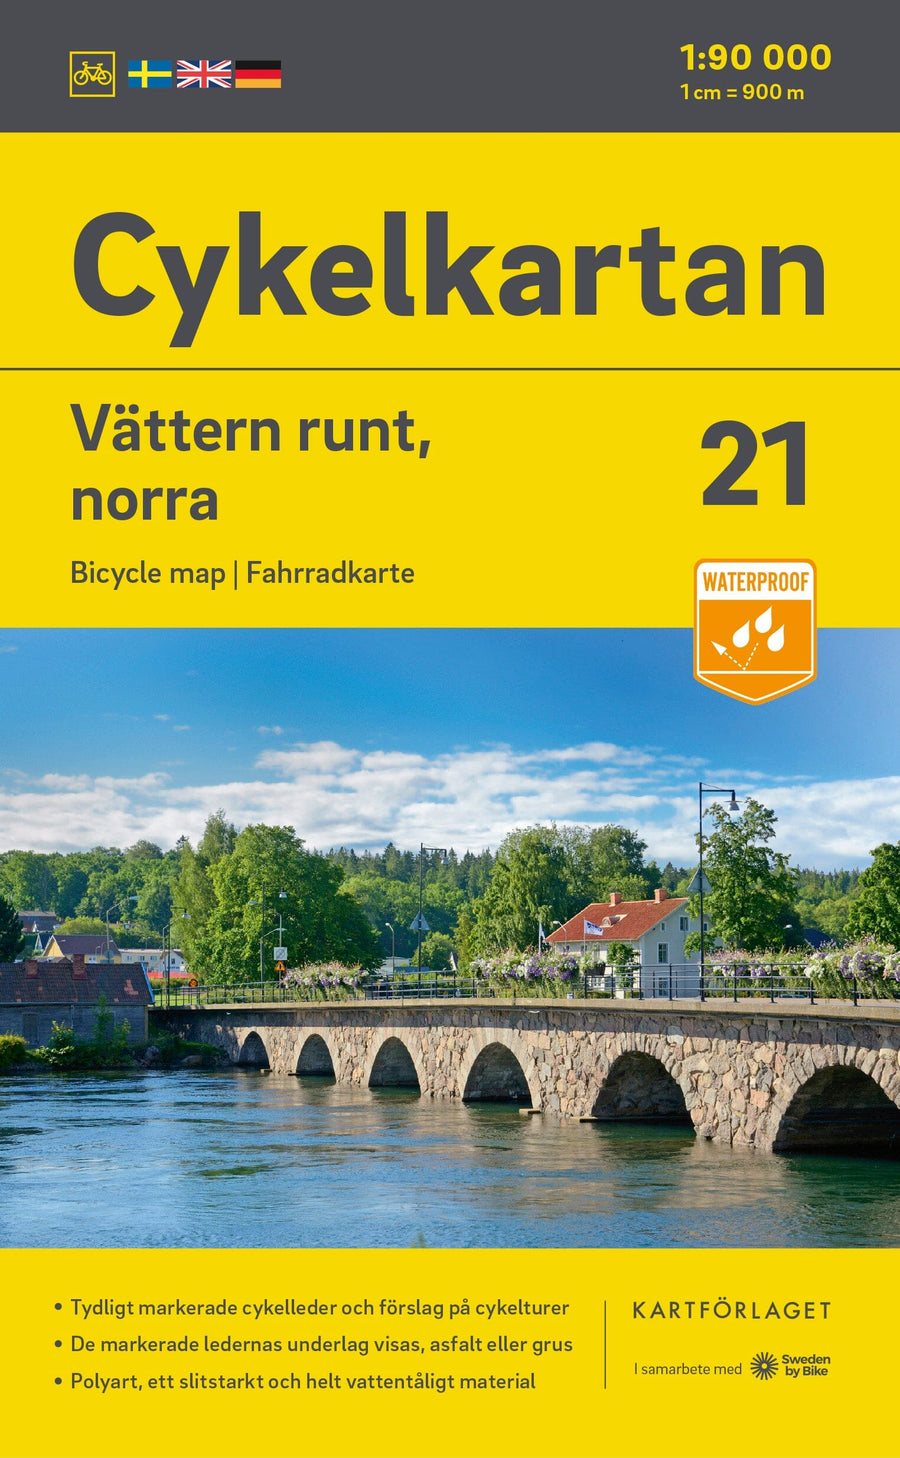 Carte cycliste n° 21 - Lac Vätter Nord (Suède) | Norstedts carte pliée Norstedts 